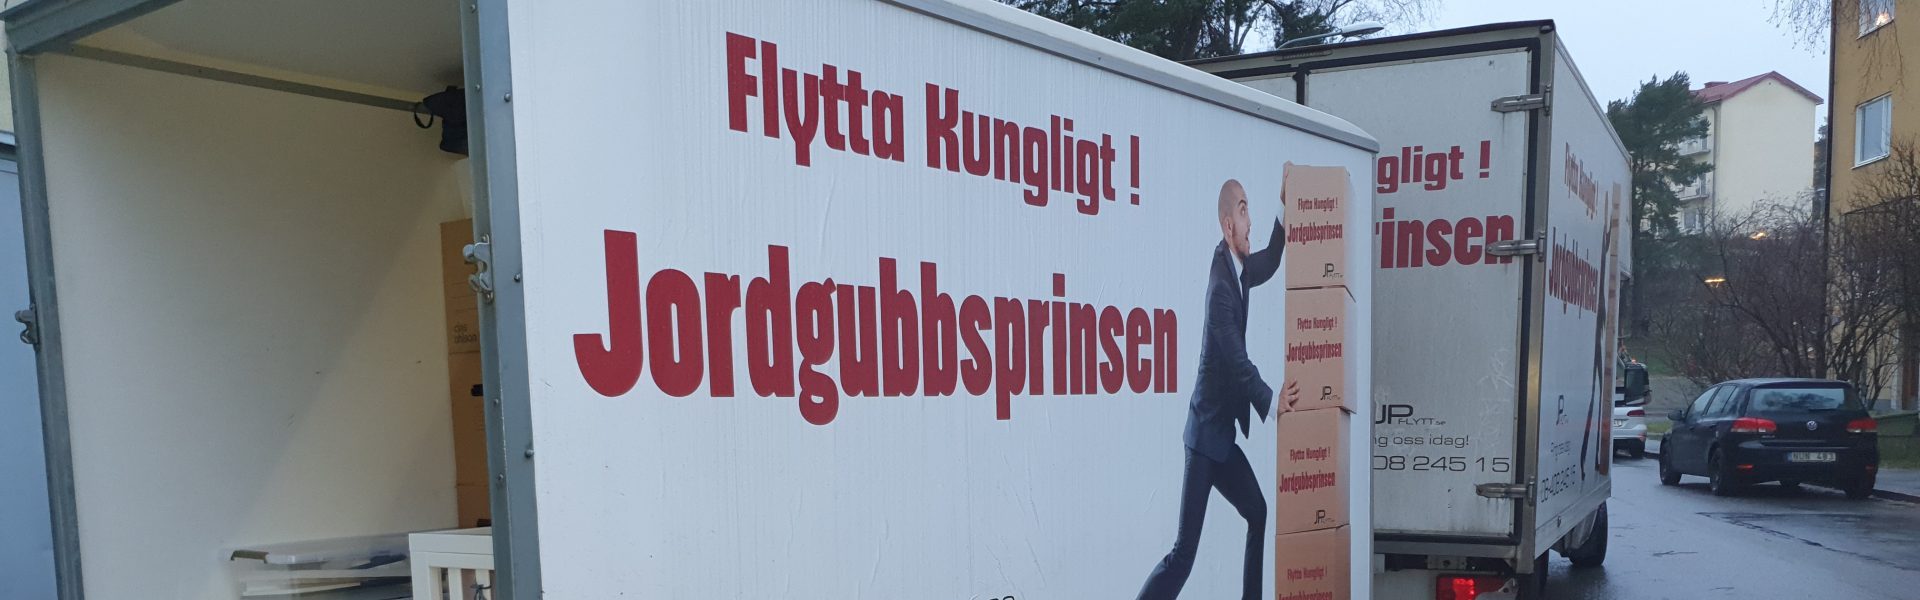 Jordgubbsprinsen Flyttfirma i Stockholm